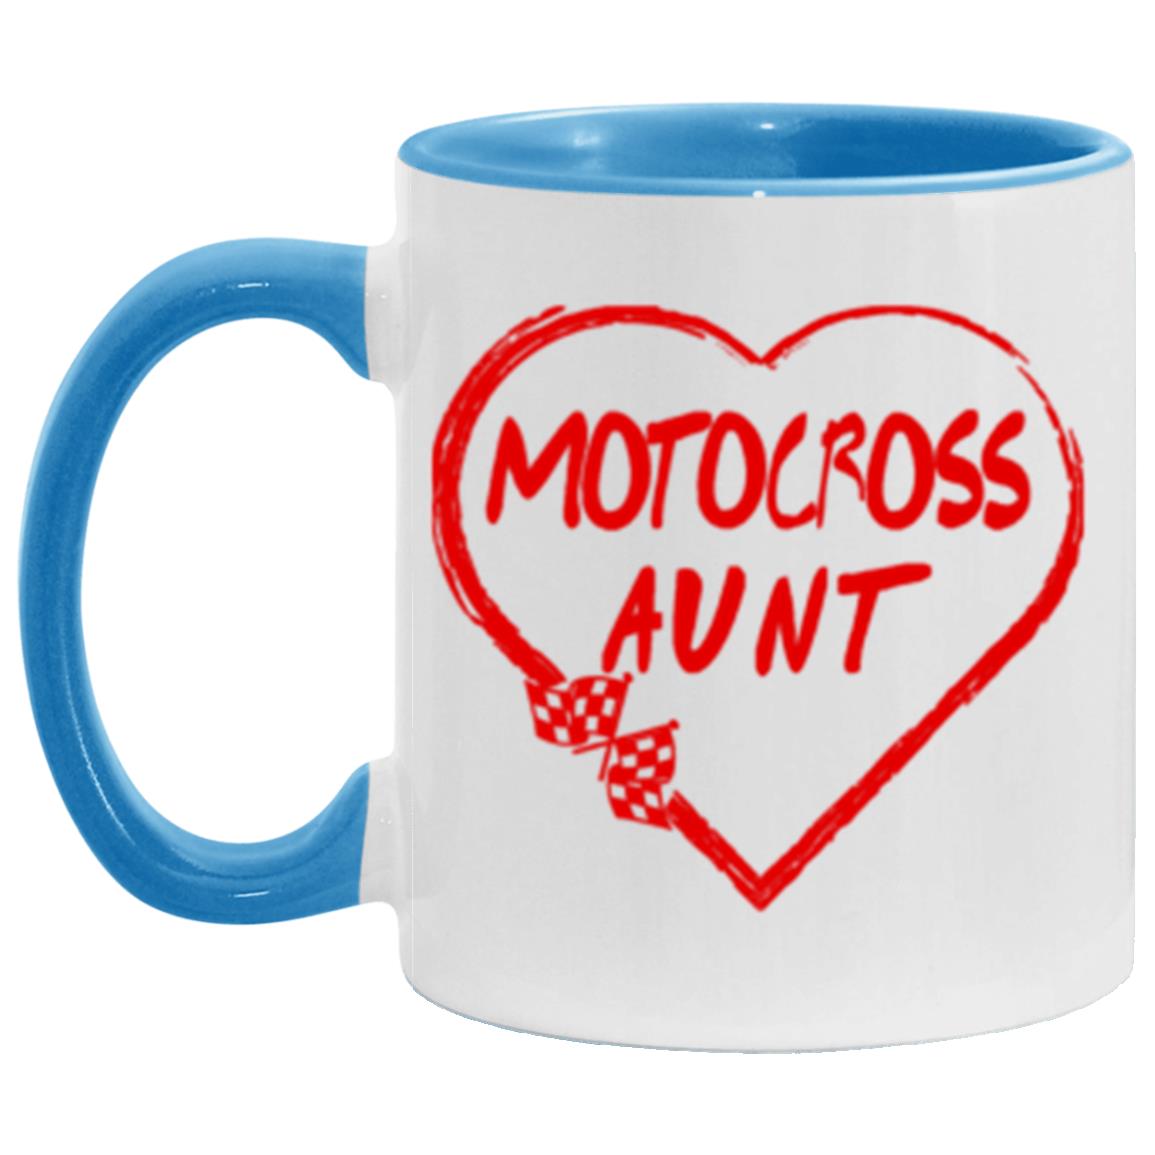 Motocross Aunt Heart 11 oz. Accent Mug